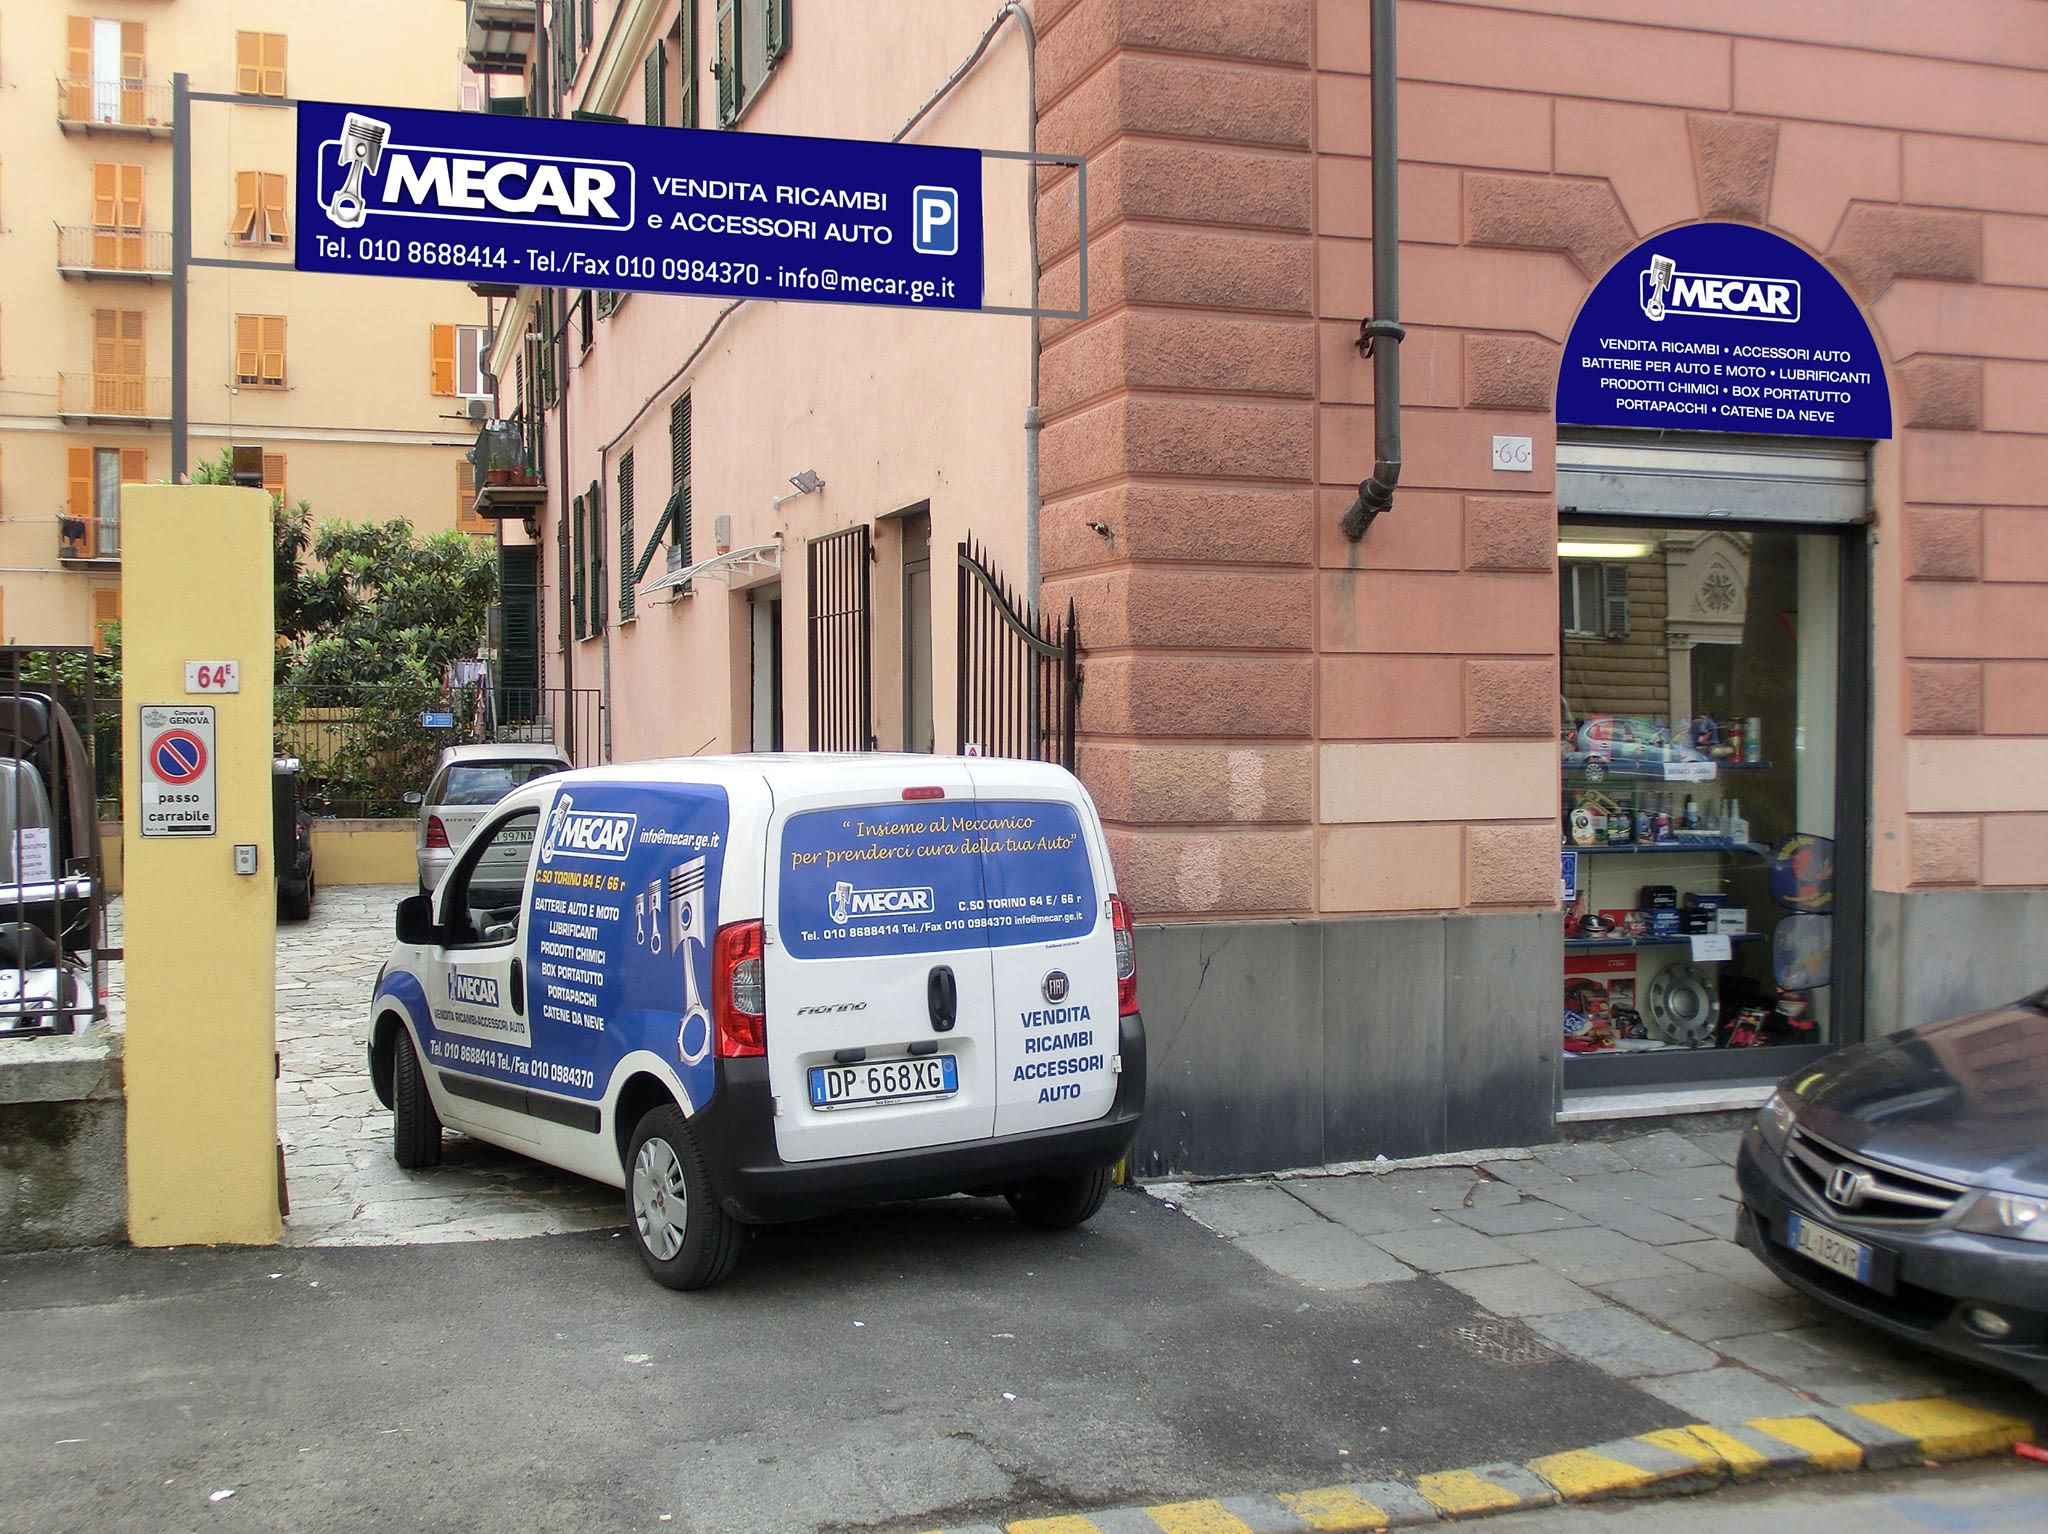 Mecar Autoricambi(Genoa - Corso Torino)